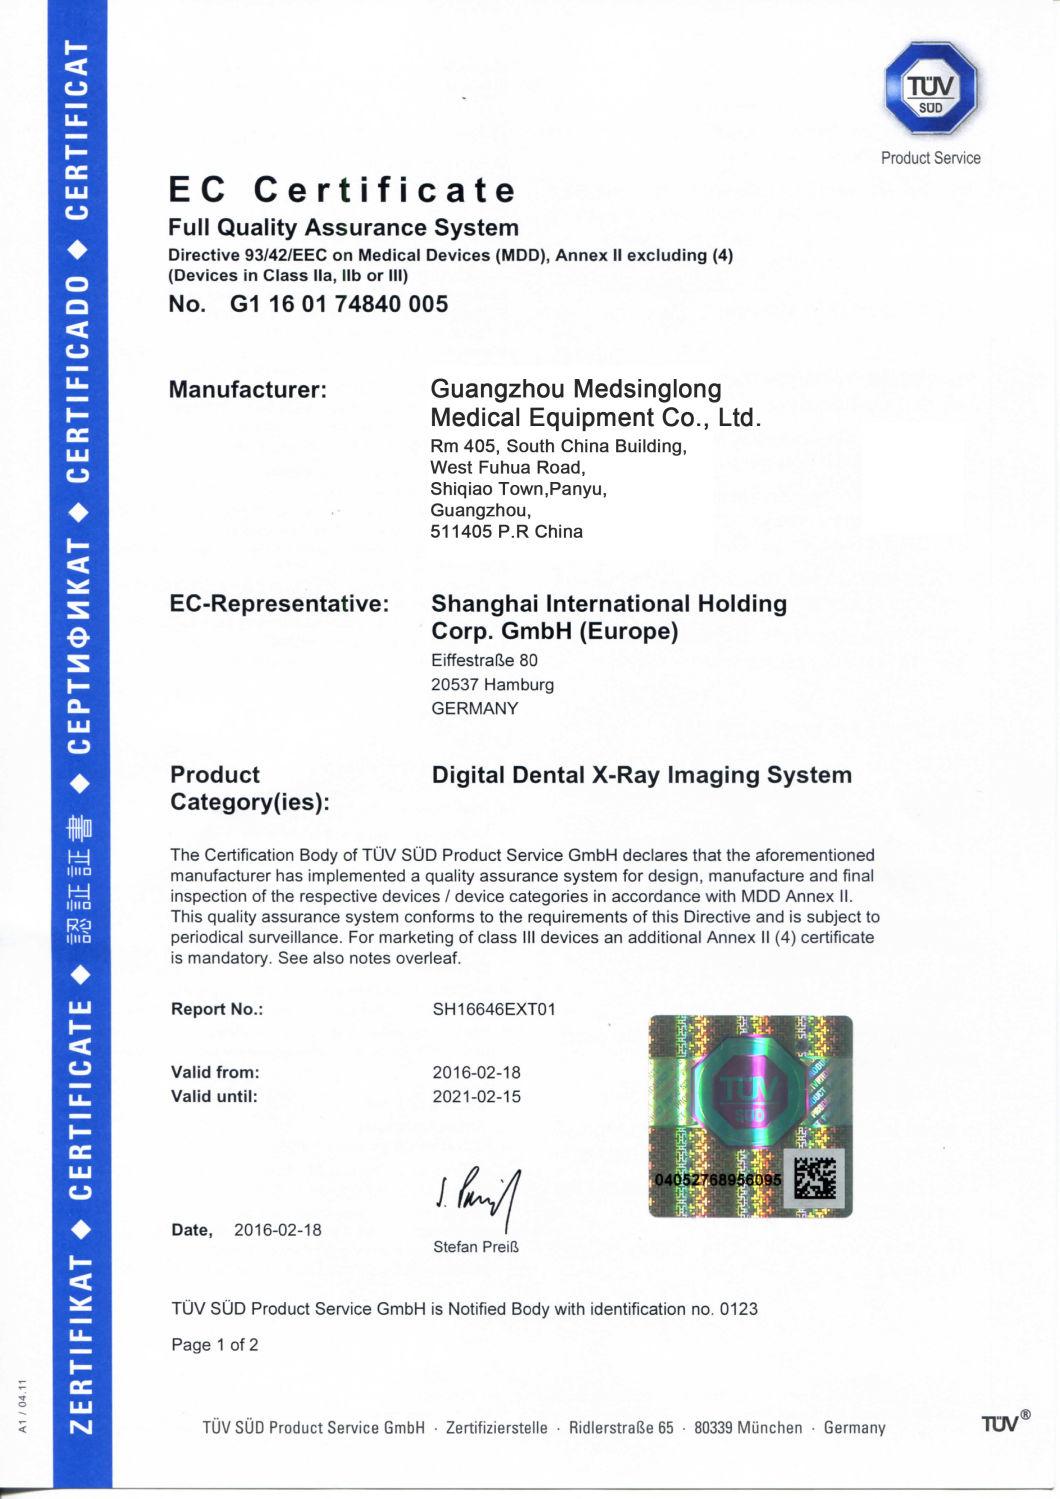 Mslfp12 Cheap Price Dental Imaging System Digital Intraoral X-ray Sensor